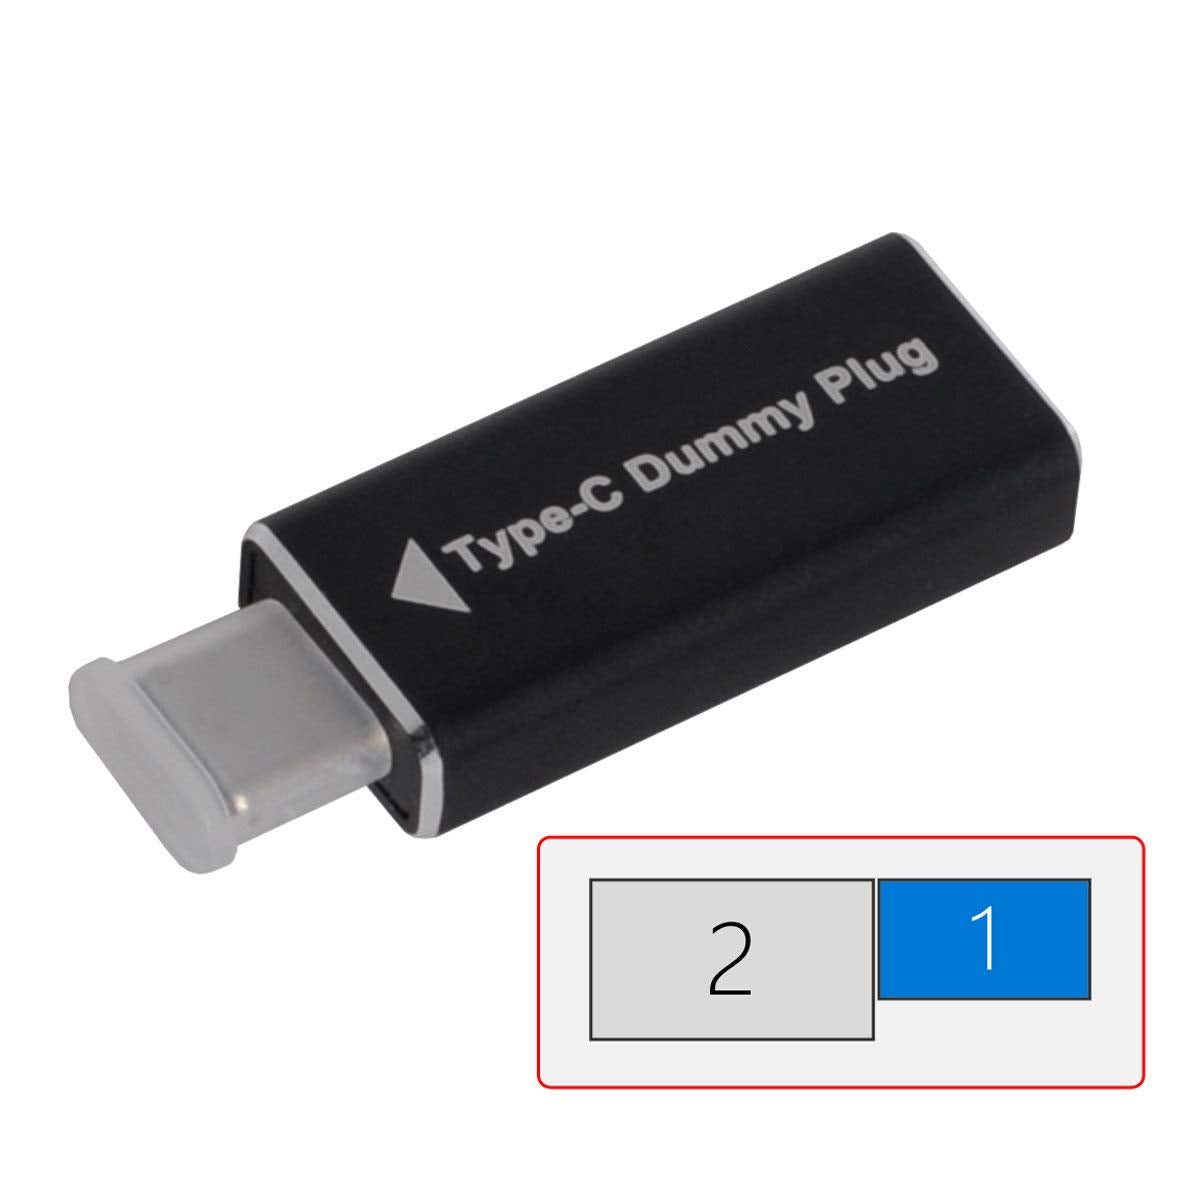 cablecc CY Virtual Display Adapter USB-C Type-C DDC EDID Dummy Plug Headless Ghost Display Emulator 1920x1080p@60Hz